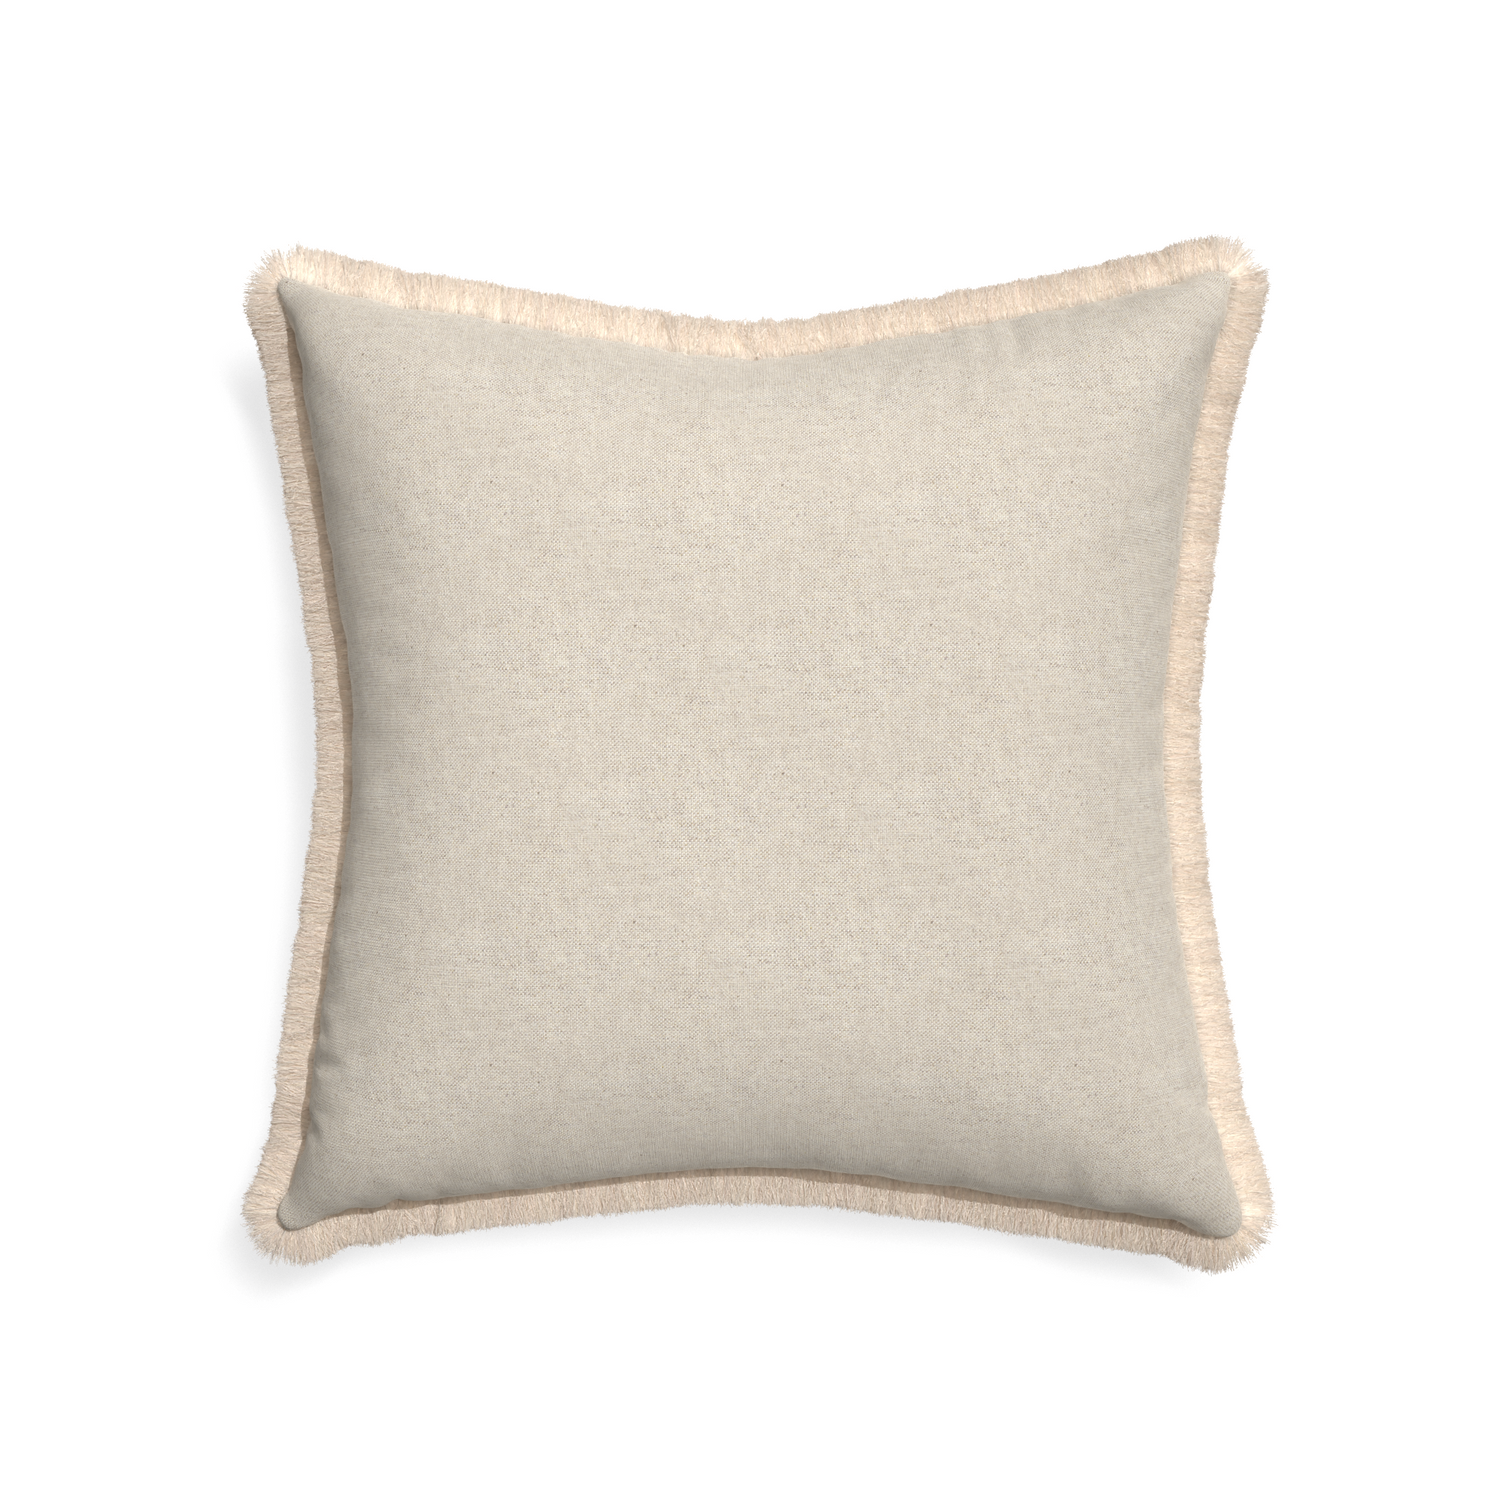 22-square oat custom pillow with cream fringe on white background